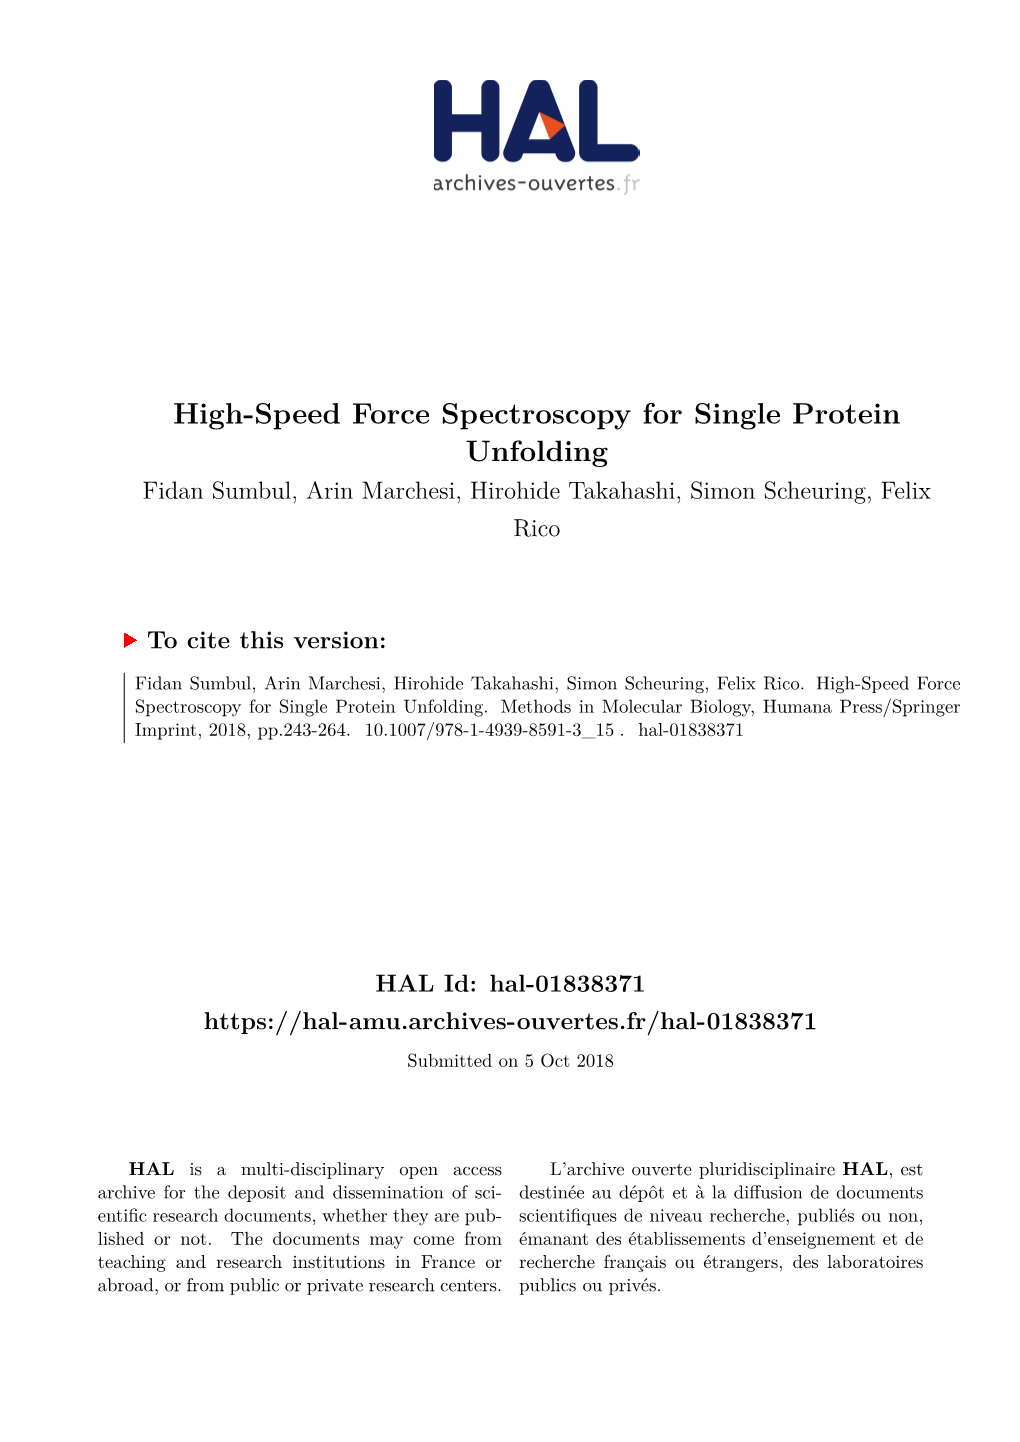 High-Speed Force Spectroscopy for Single Protein Unfolding Fidan Sumbul, Arin Marchesi, Hirohide Takahashi, Simon Scheuring, Felix Rico